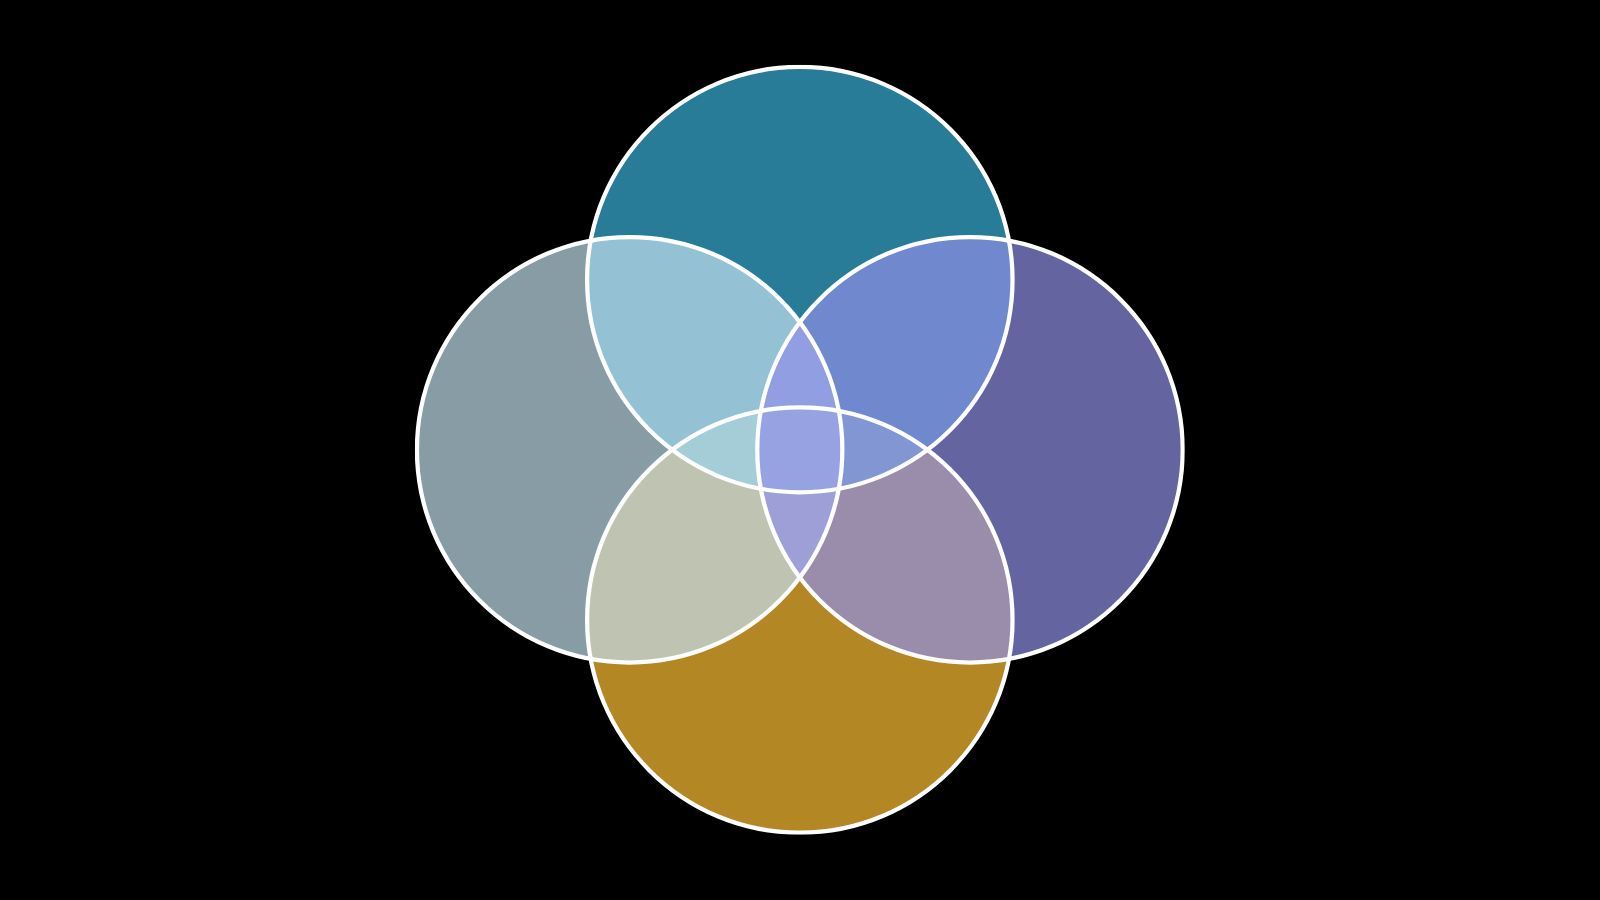 A Venn diagram with four overlapping circles